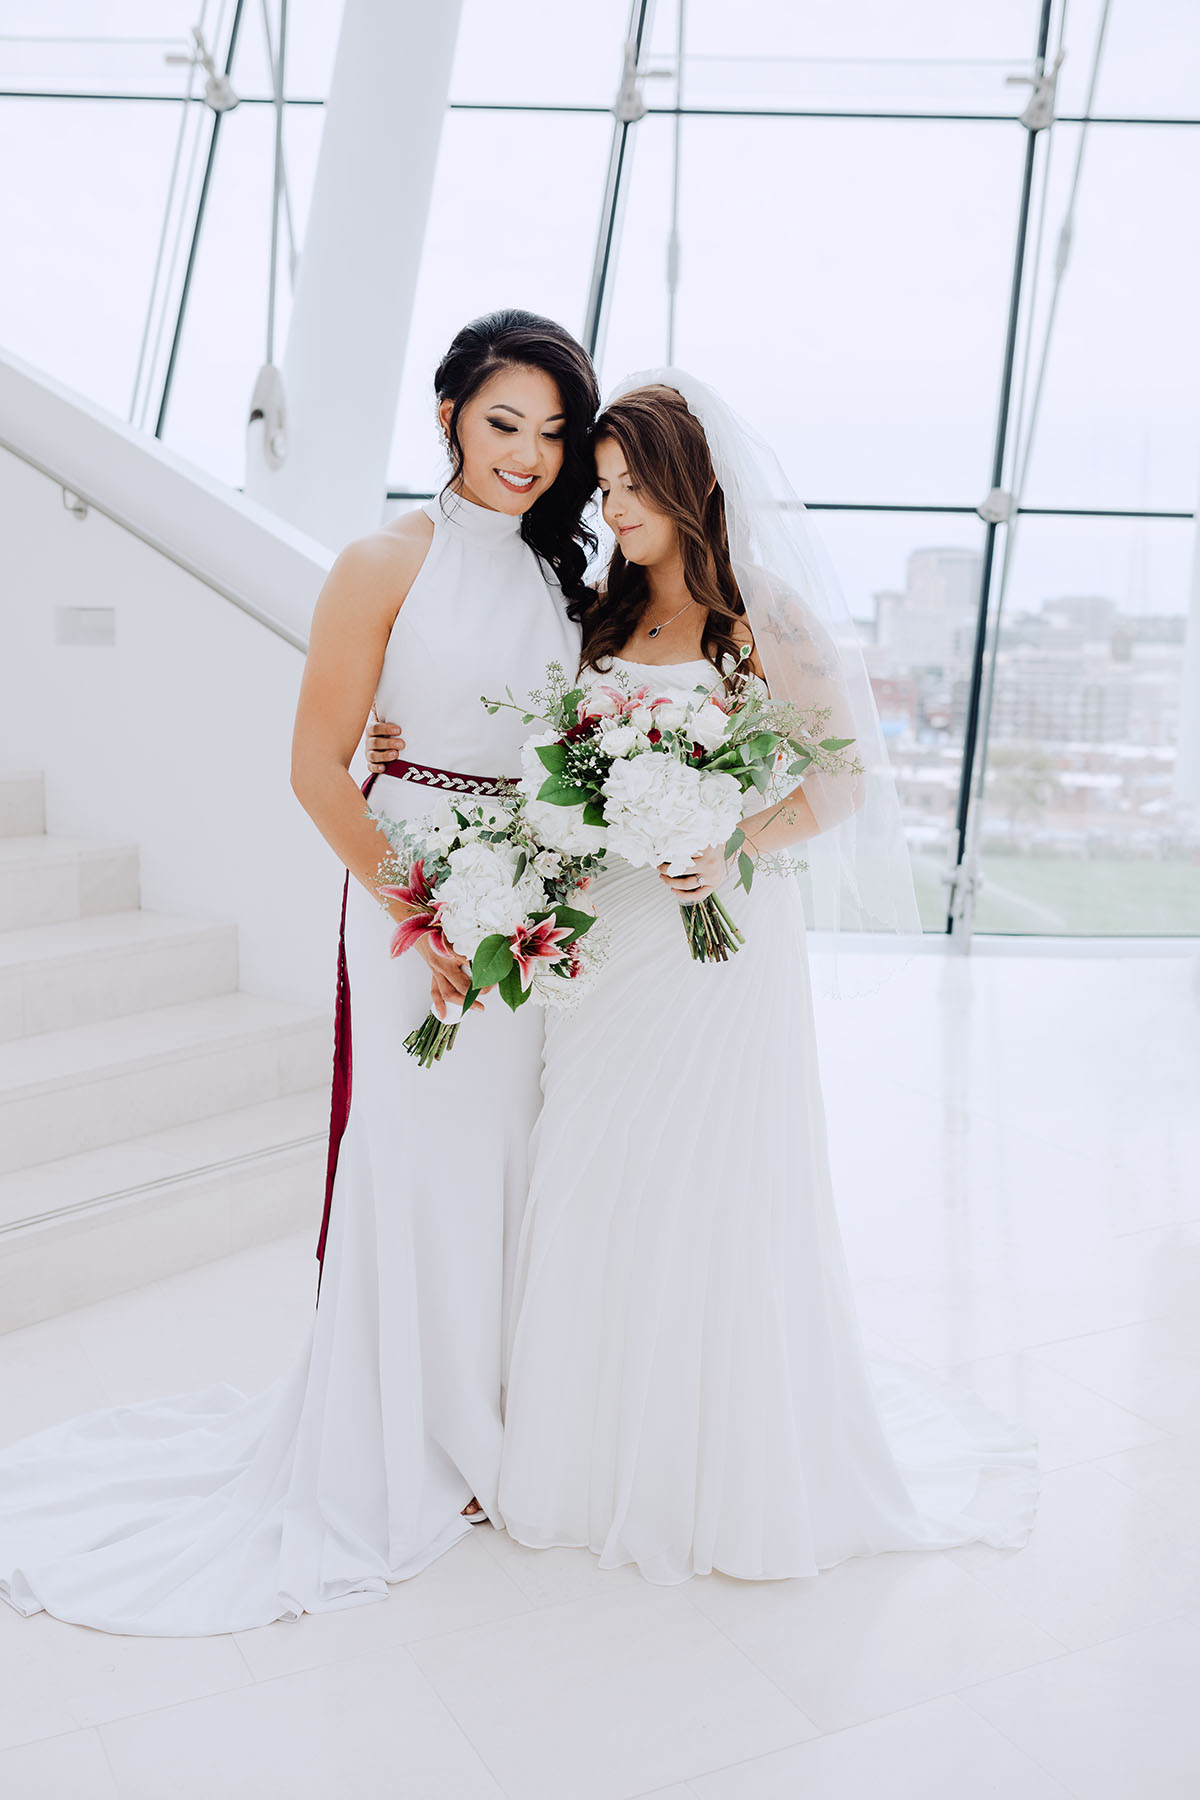 Modern rooftop wedding in Kansas City, Kansas Asian-American lesbian wedding long white dresses